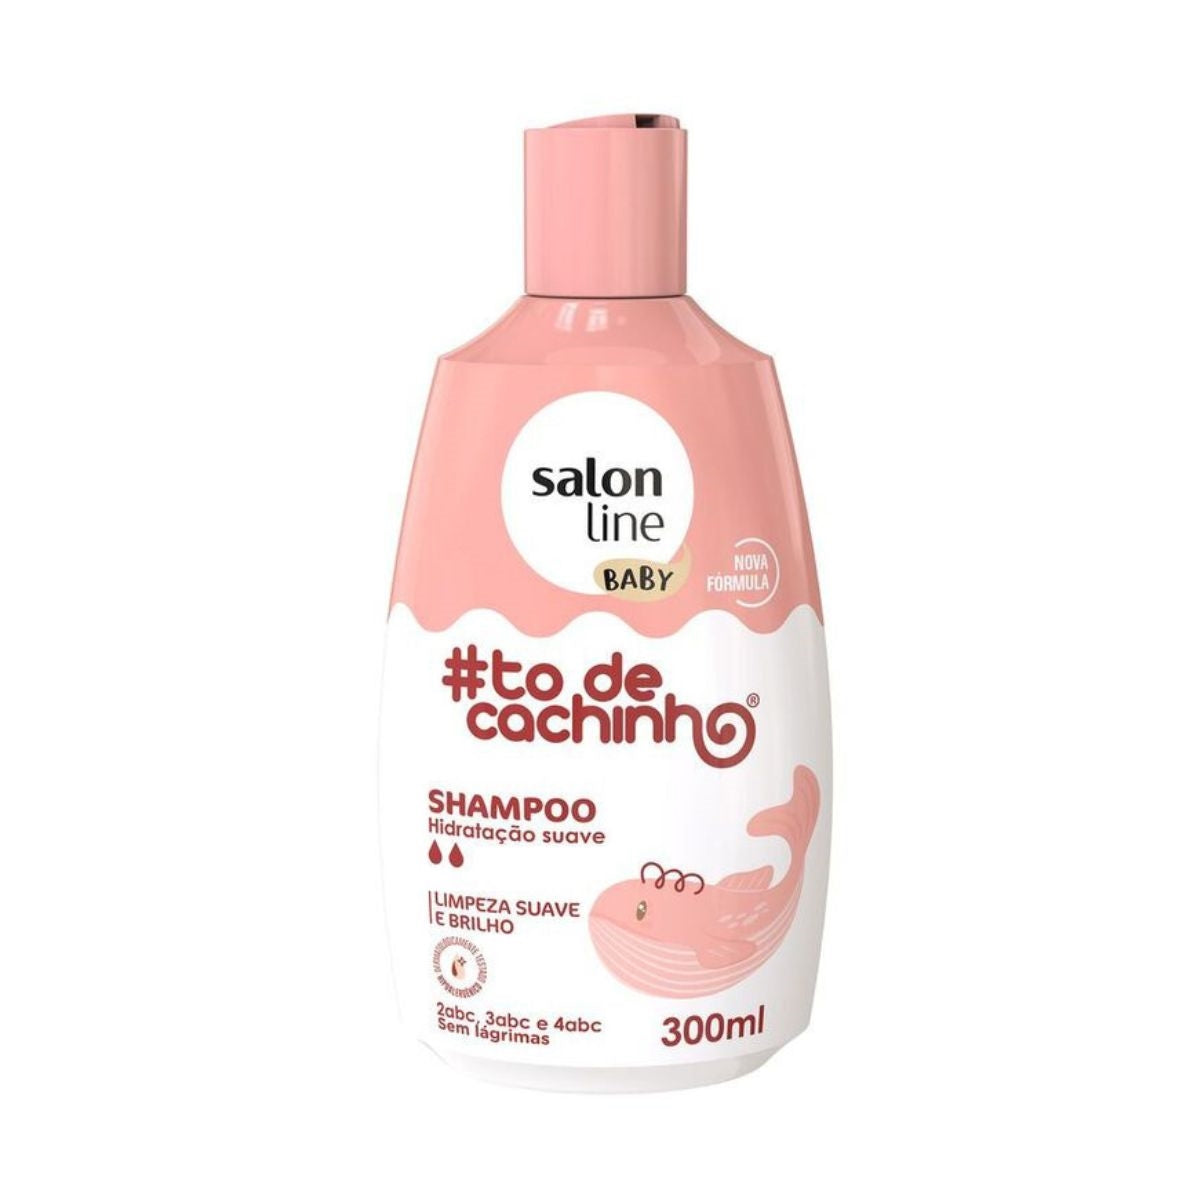 Ligne de salon #Todecachinhos Baby 2,3,4 ABC - 300 ml shampooing